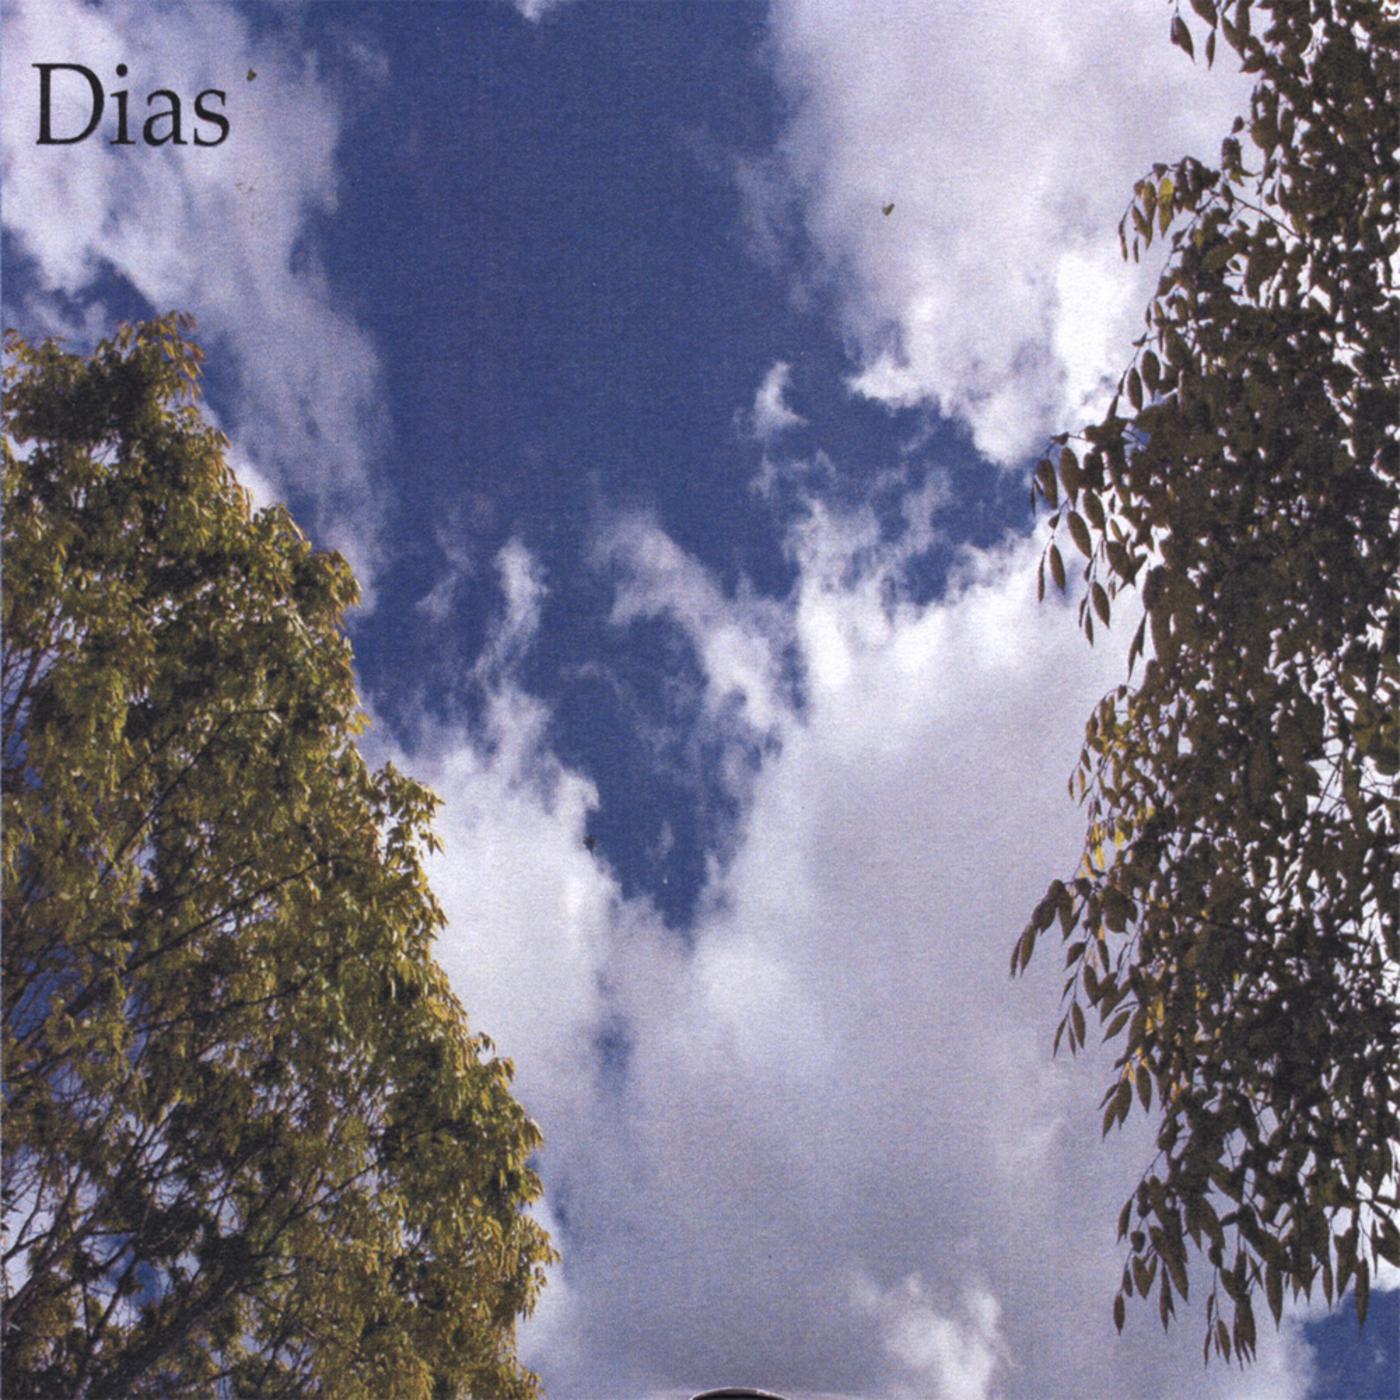 Dias - Waiting